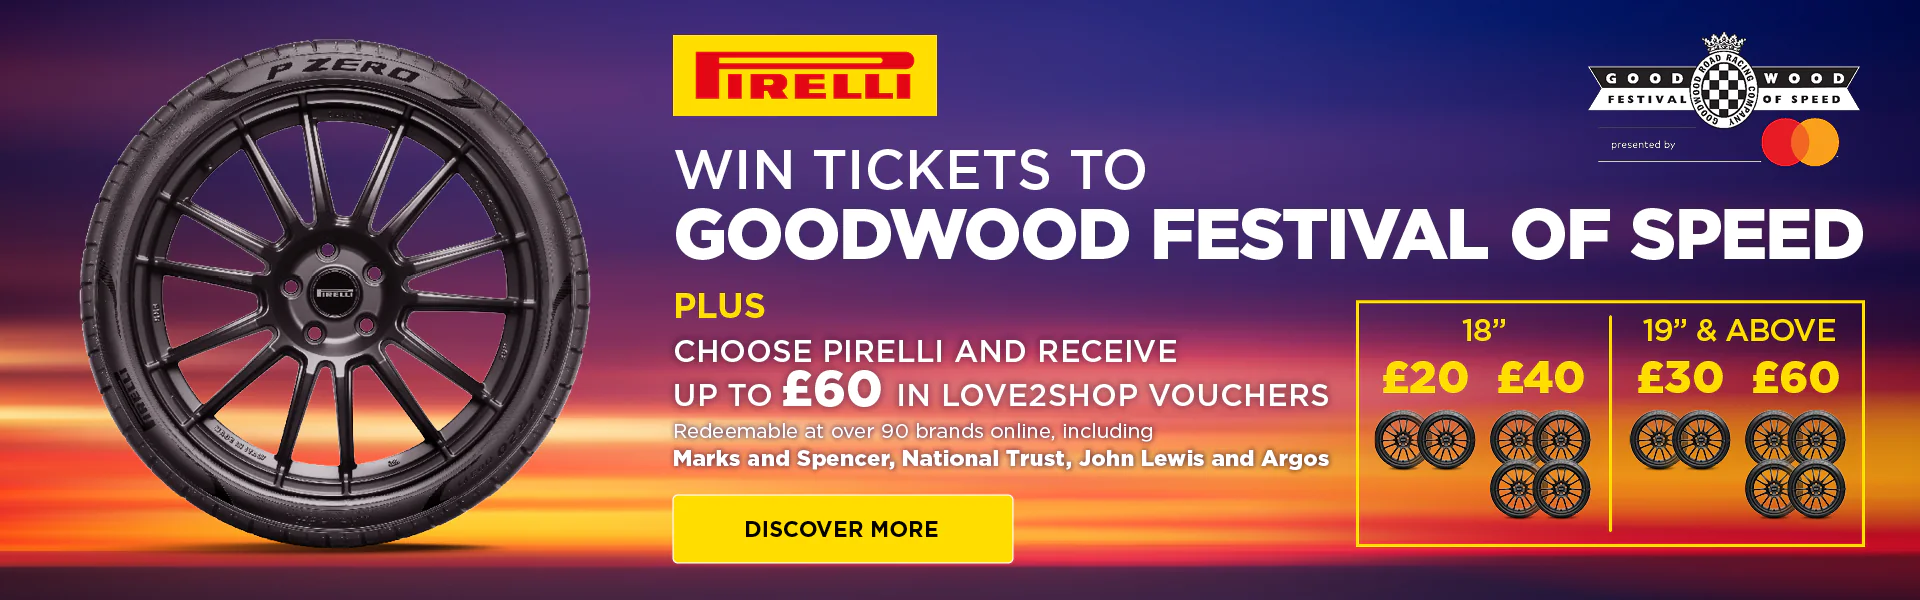 Pirelli - Goodwood FoS Tickets & Love2Shop Vouchers